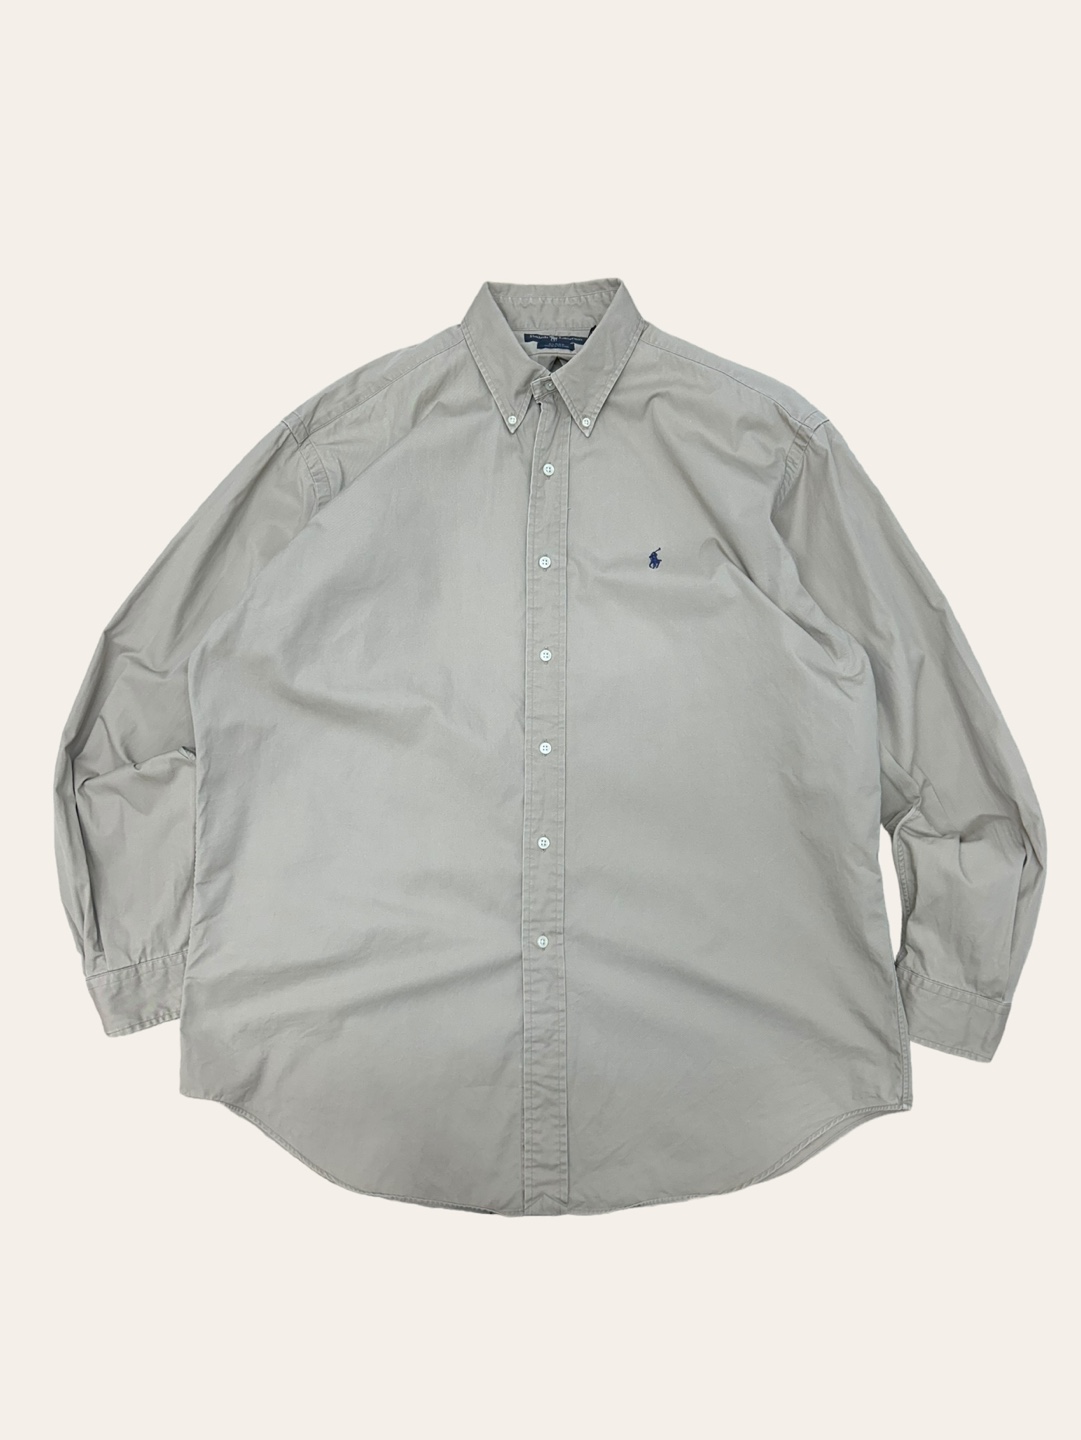 (From USA)Polo ralph lauren beige solid shirt L